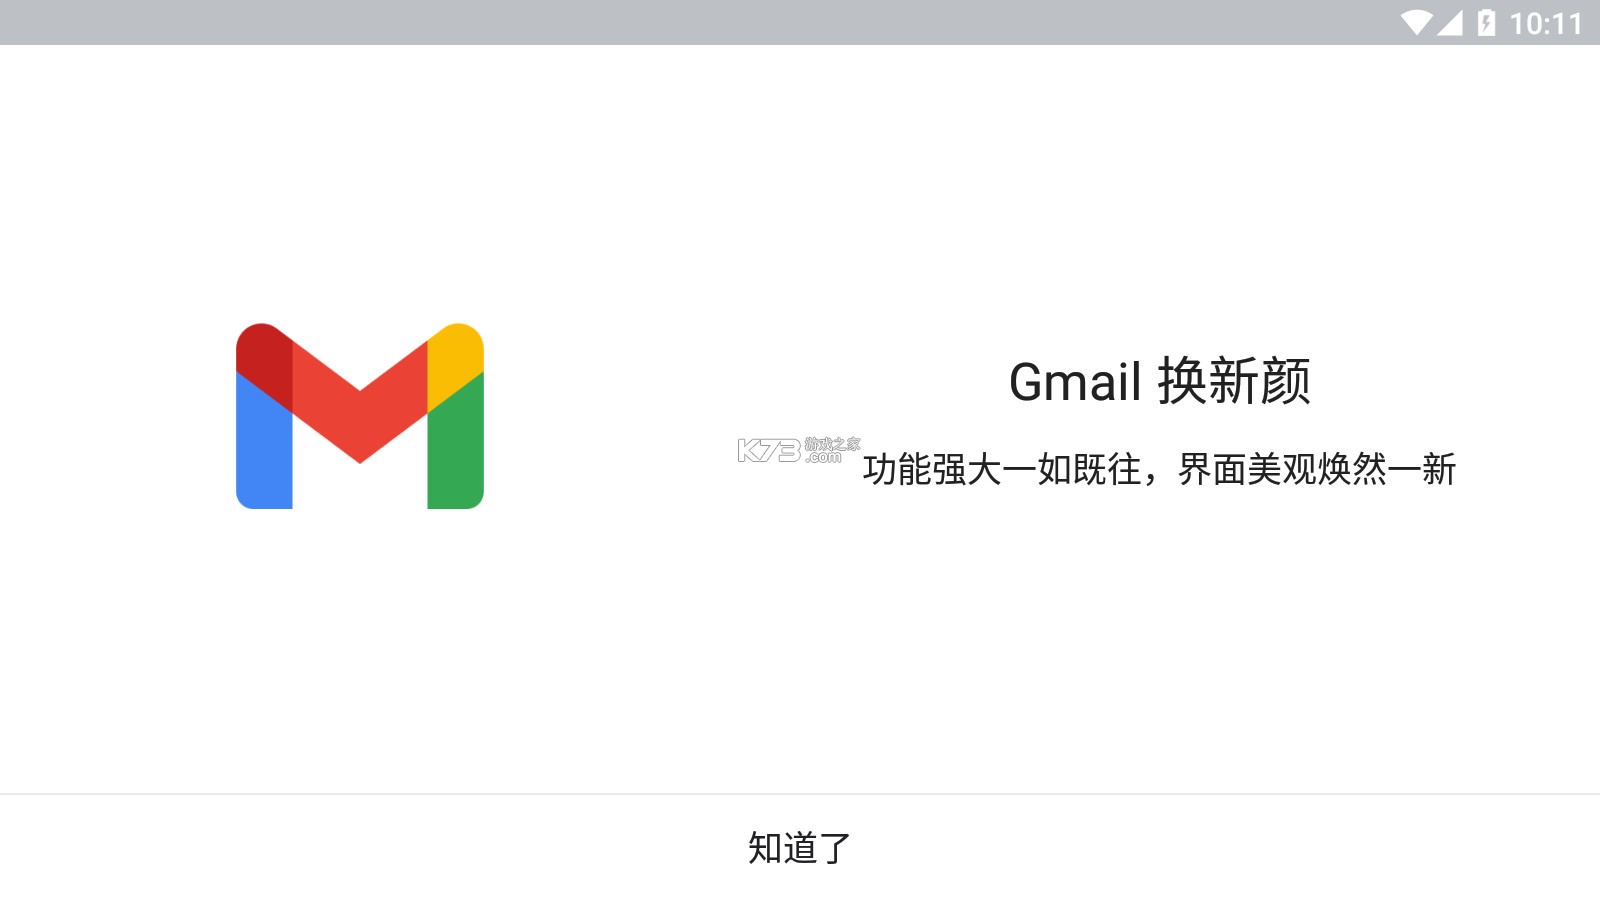 Gmail¼app-Gmailv2022.03.06.435481167°